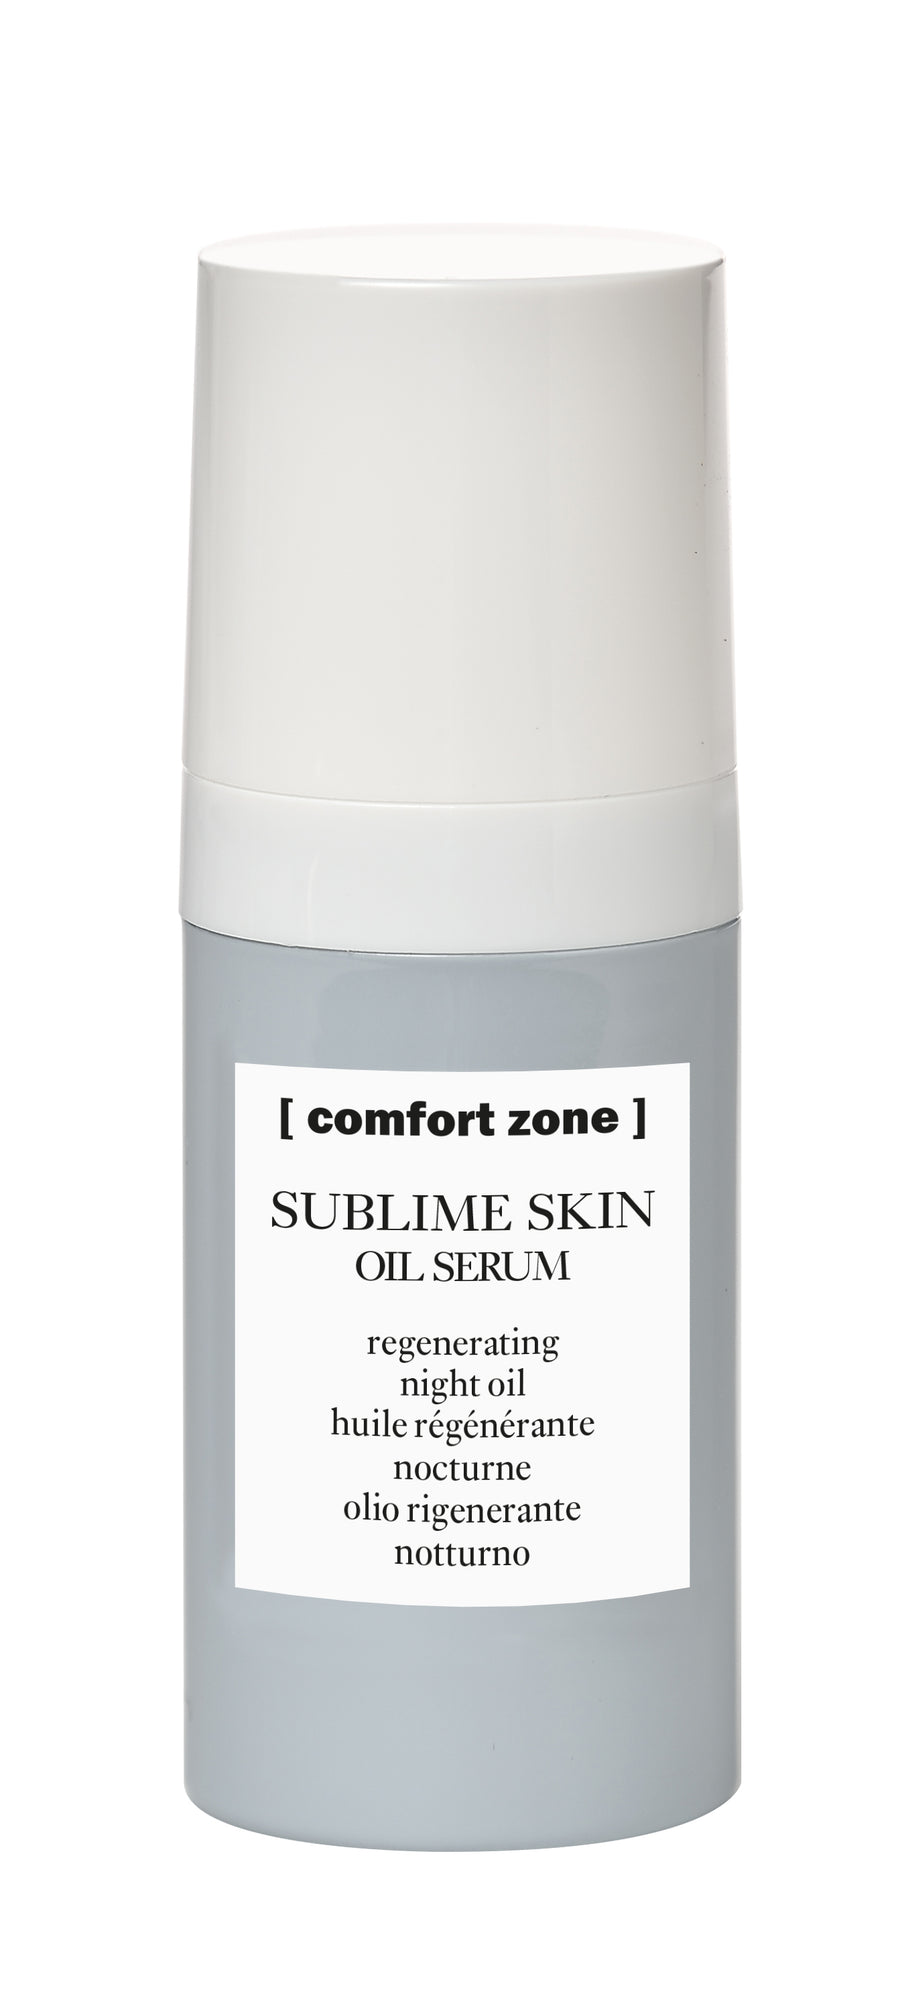 Sublime skin oil serum 30ml